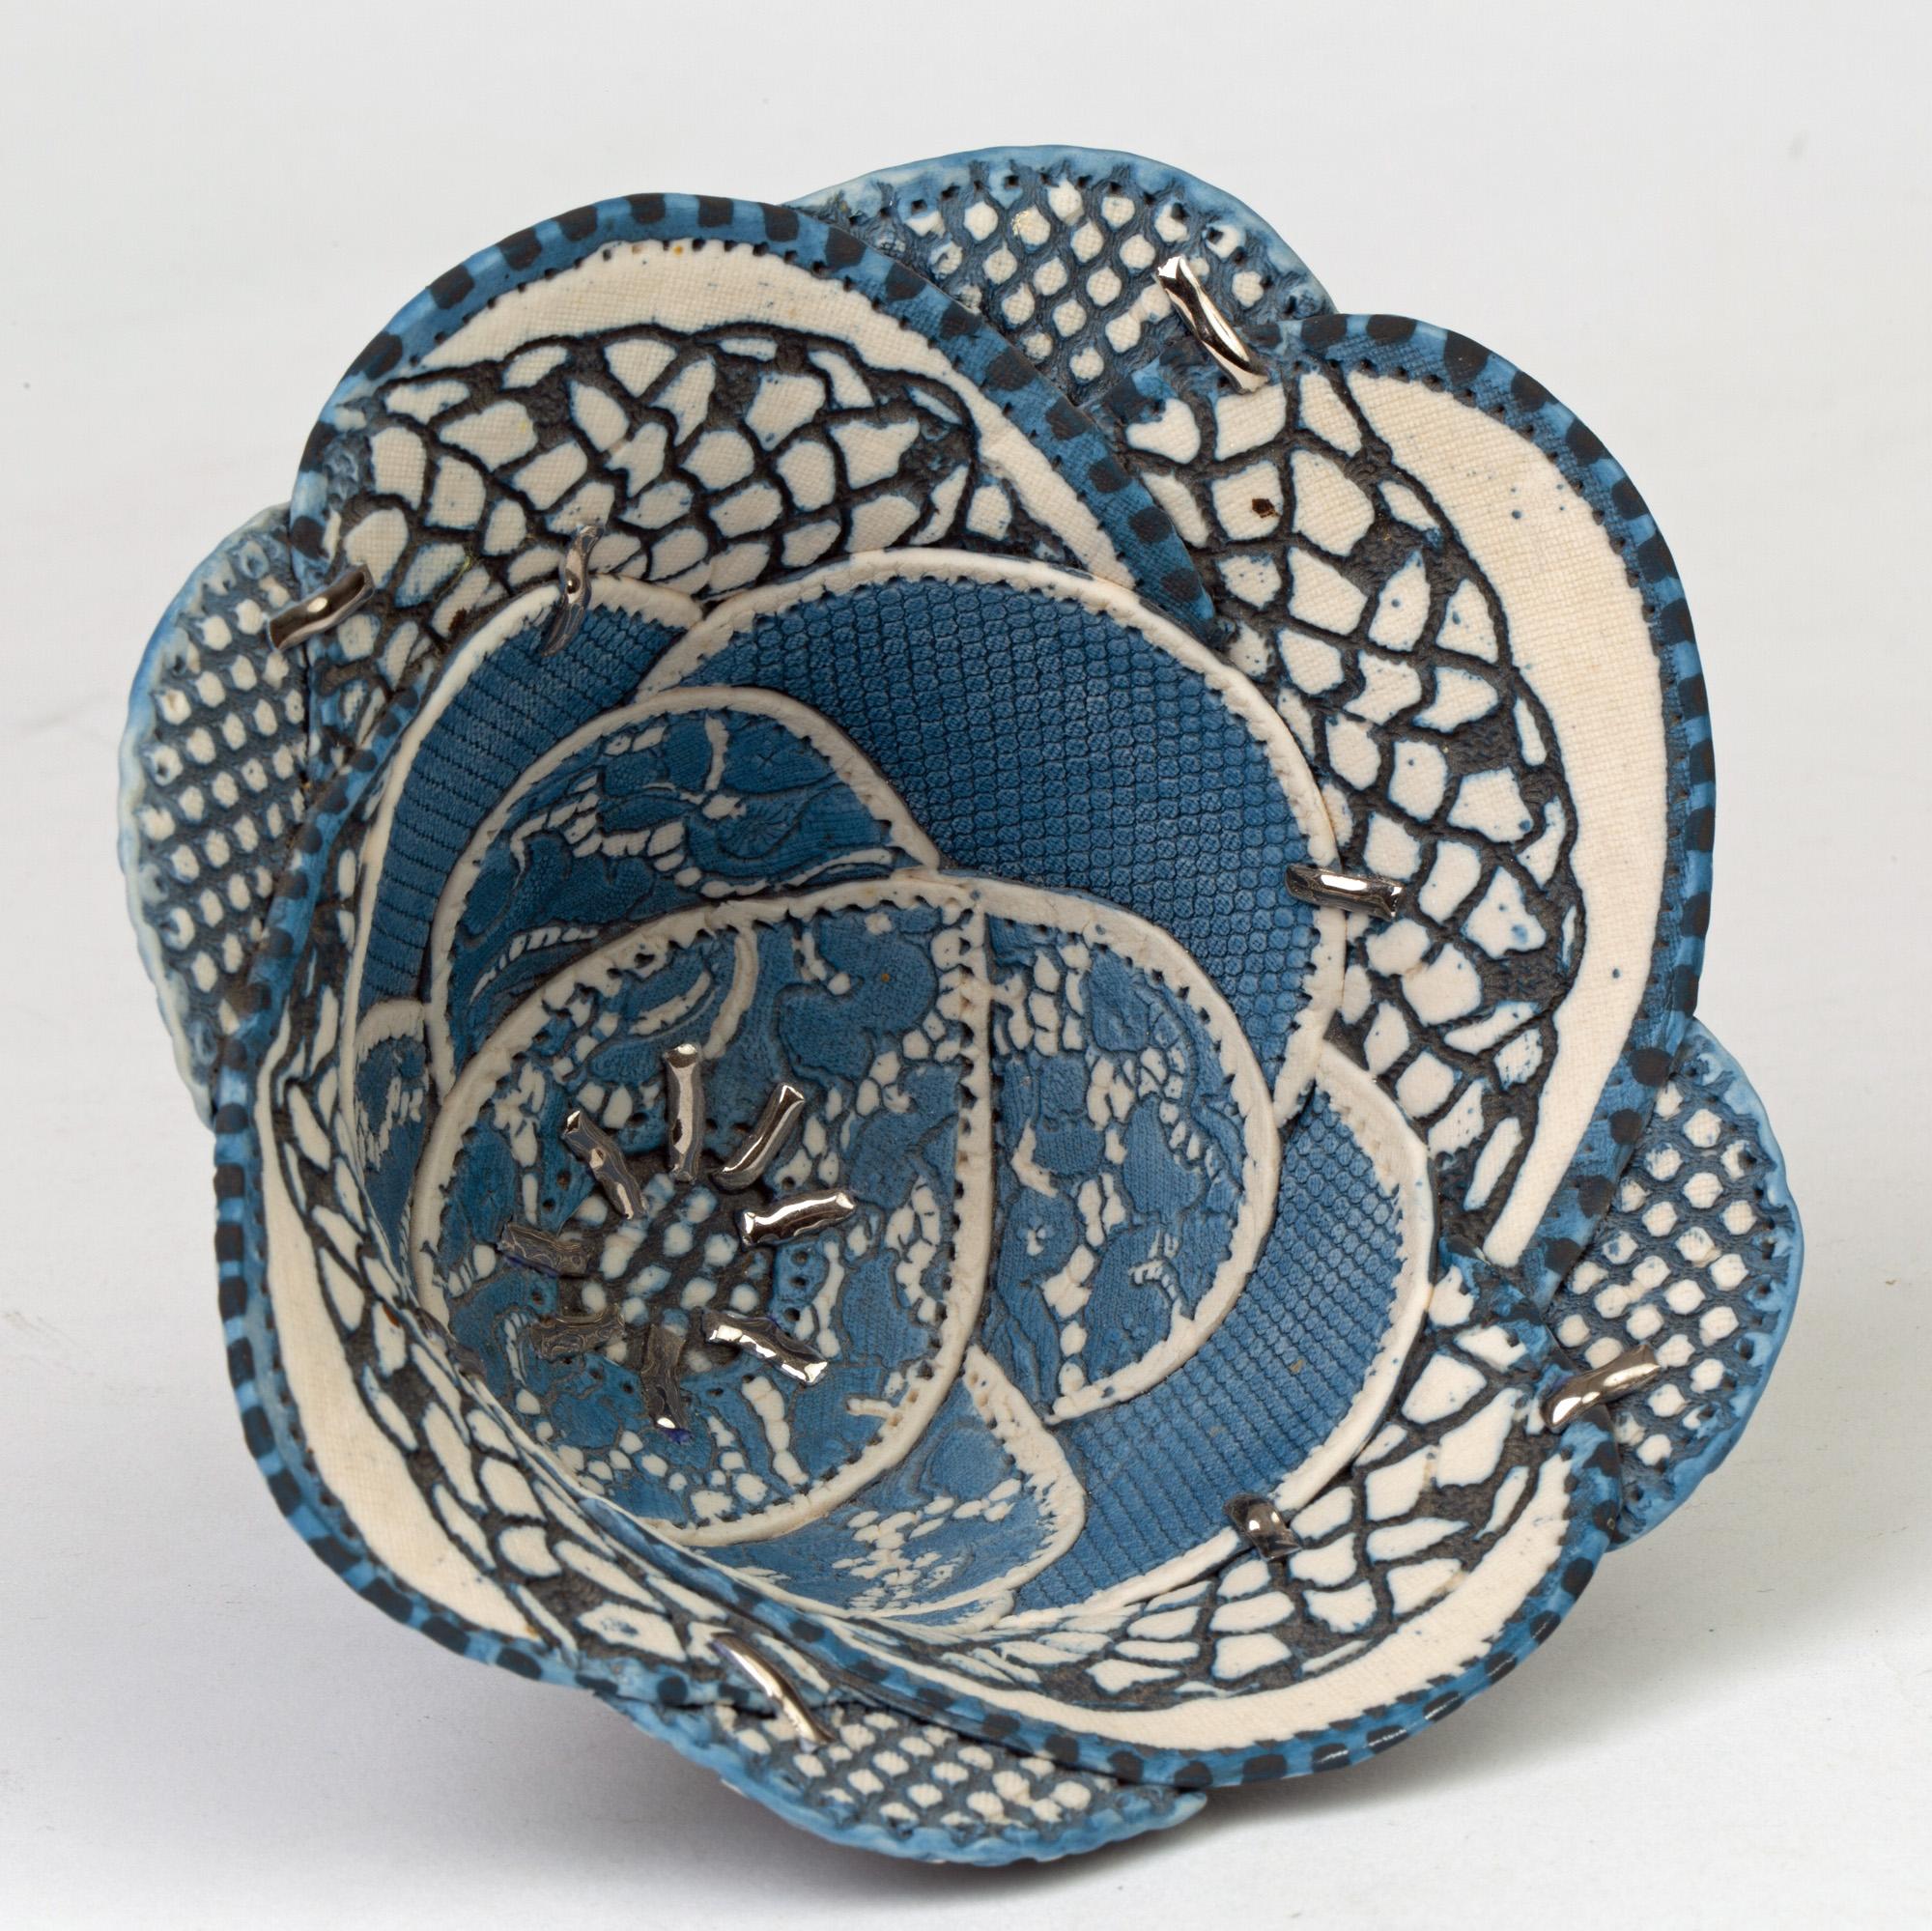 Modern Linda Chew Studio Pottery Patterned Textile Porcelain Bowl